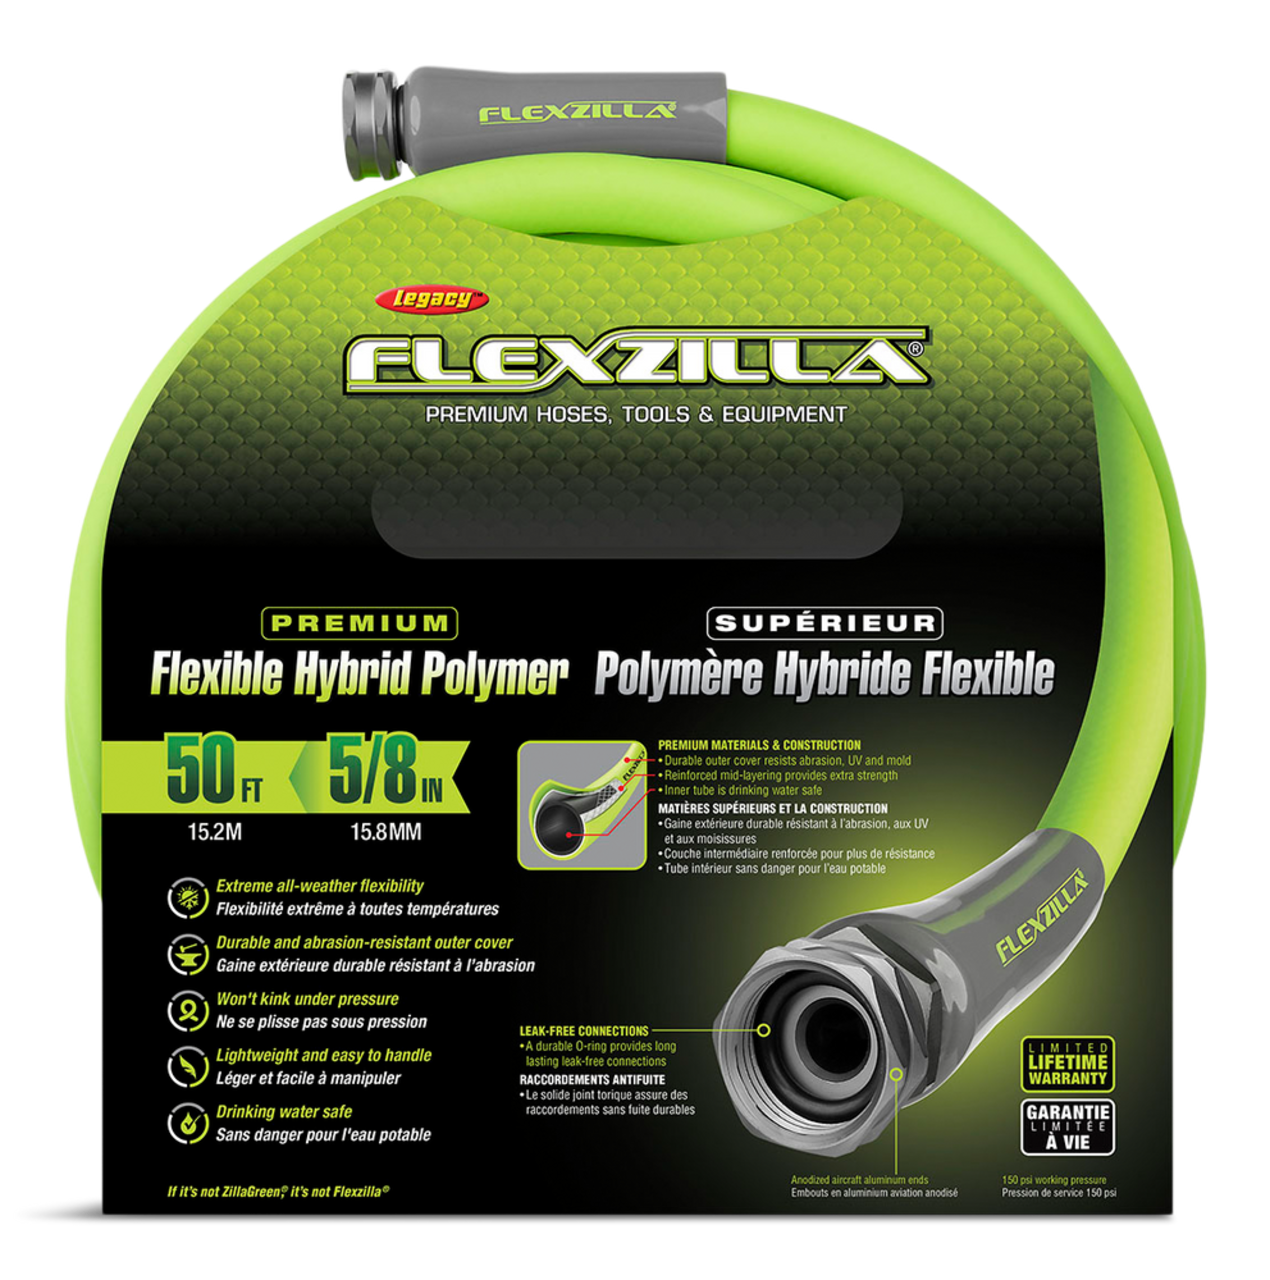 Flexzilla All-Weather Flexible Hybrid Polymer Garden Water Hose, Drinking  Water Safe, 5/8-in